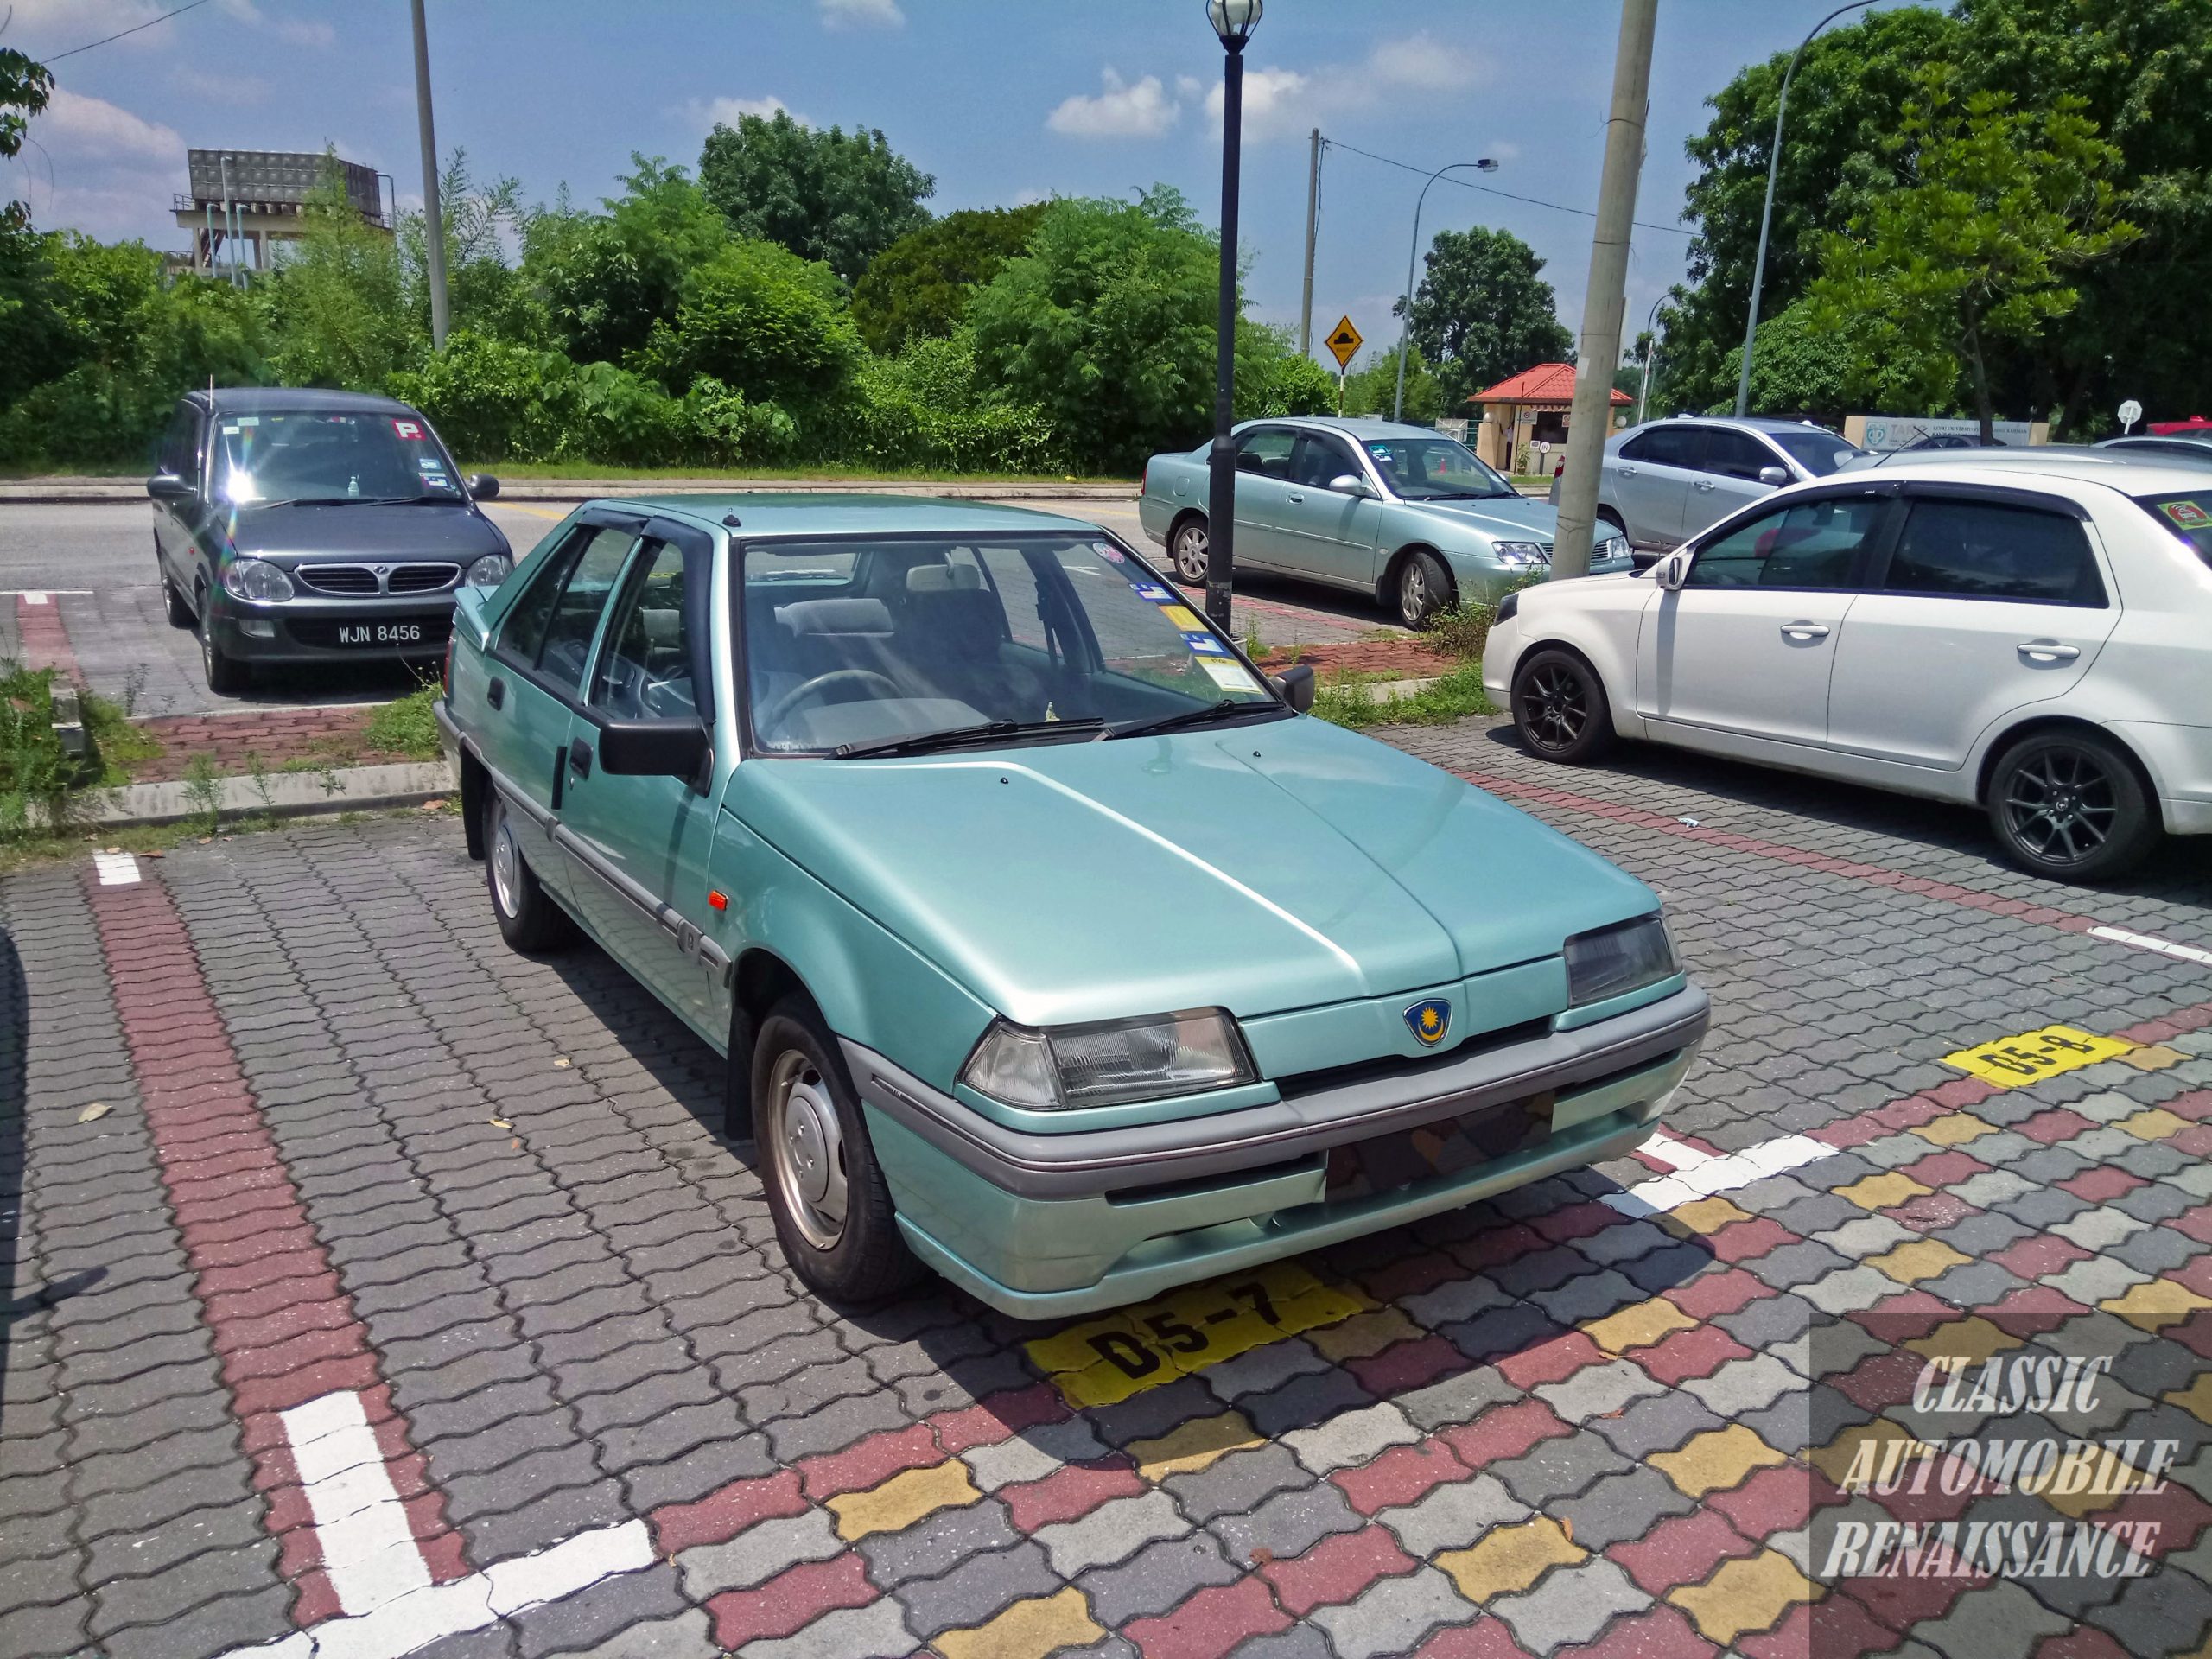 The same Proton Saga after it was repainted. Image credit: Classic Automobile Renaissance